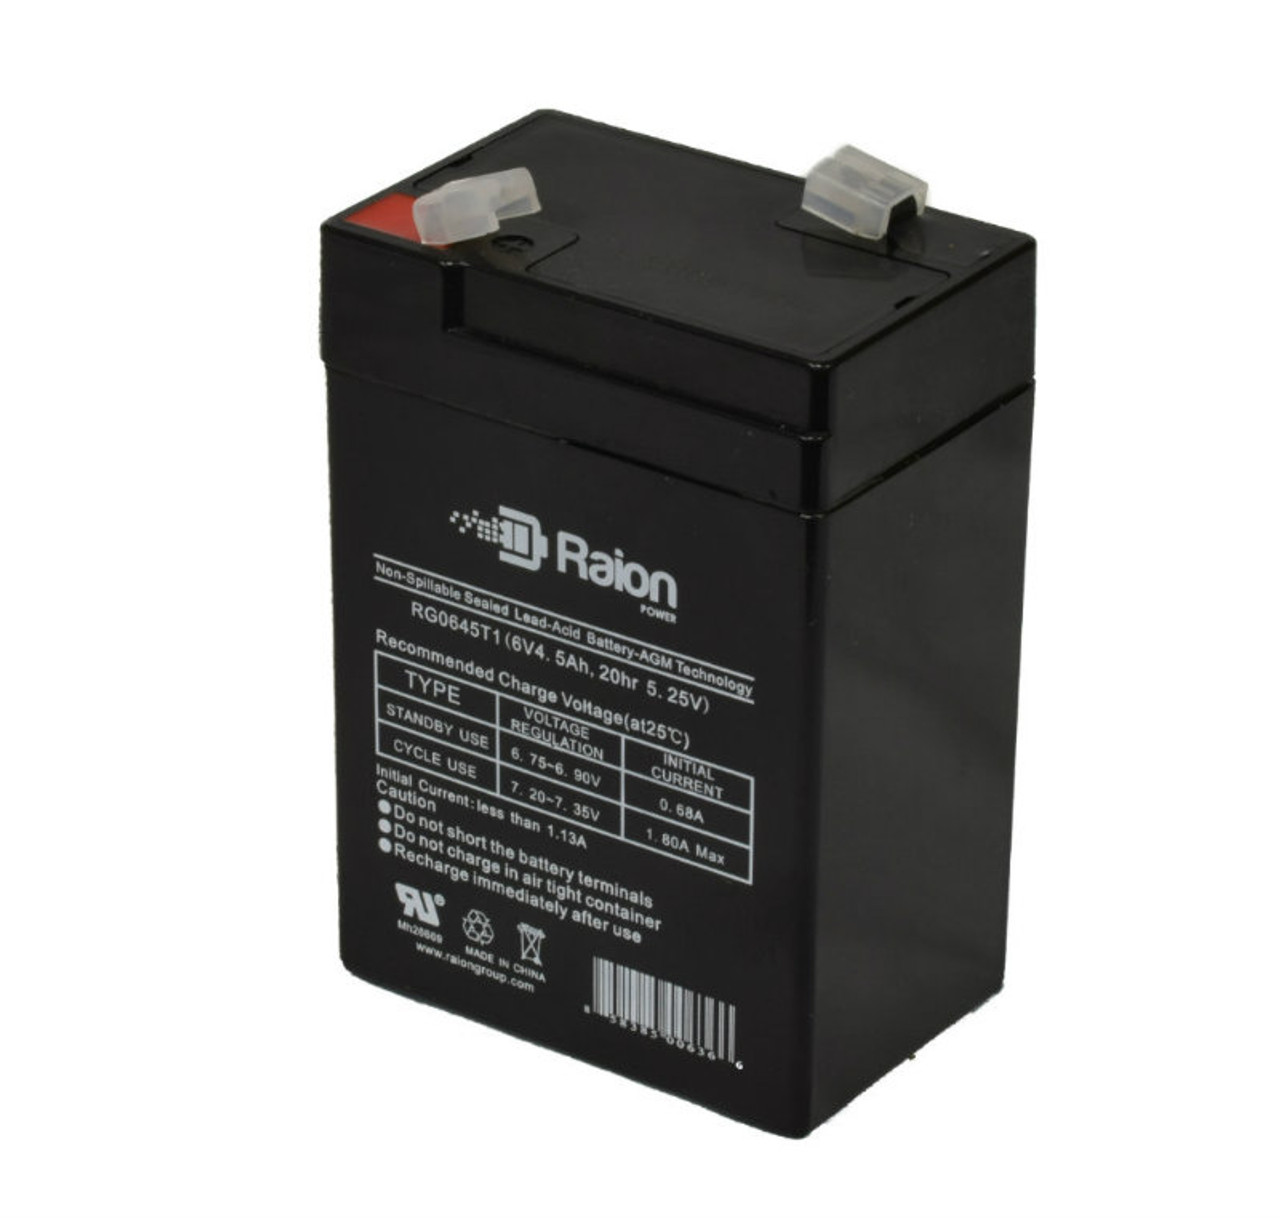 Raion Power RG0645T1 6V 4.5Ah Replacement Battery Cartridge for Kinghero SJ6V4Ah-S